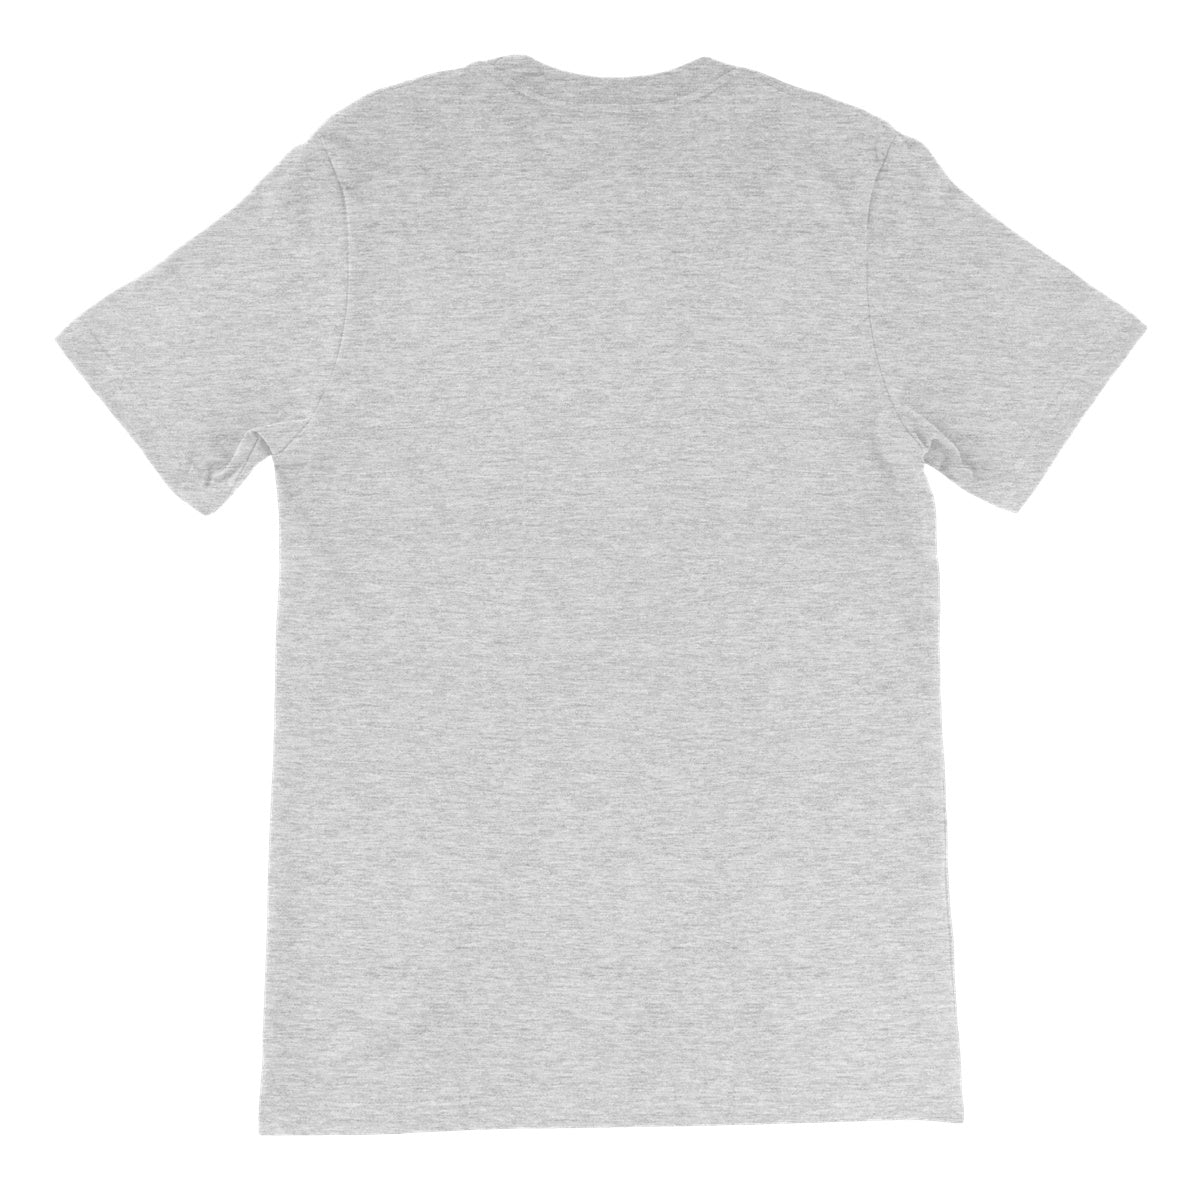 Gymp Unisex Short Sleeve T-Shirt